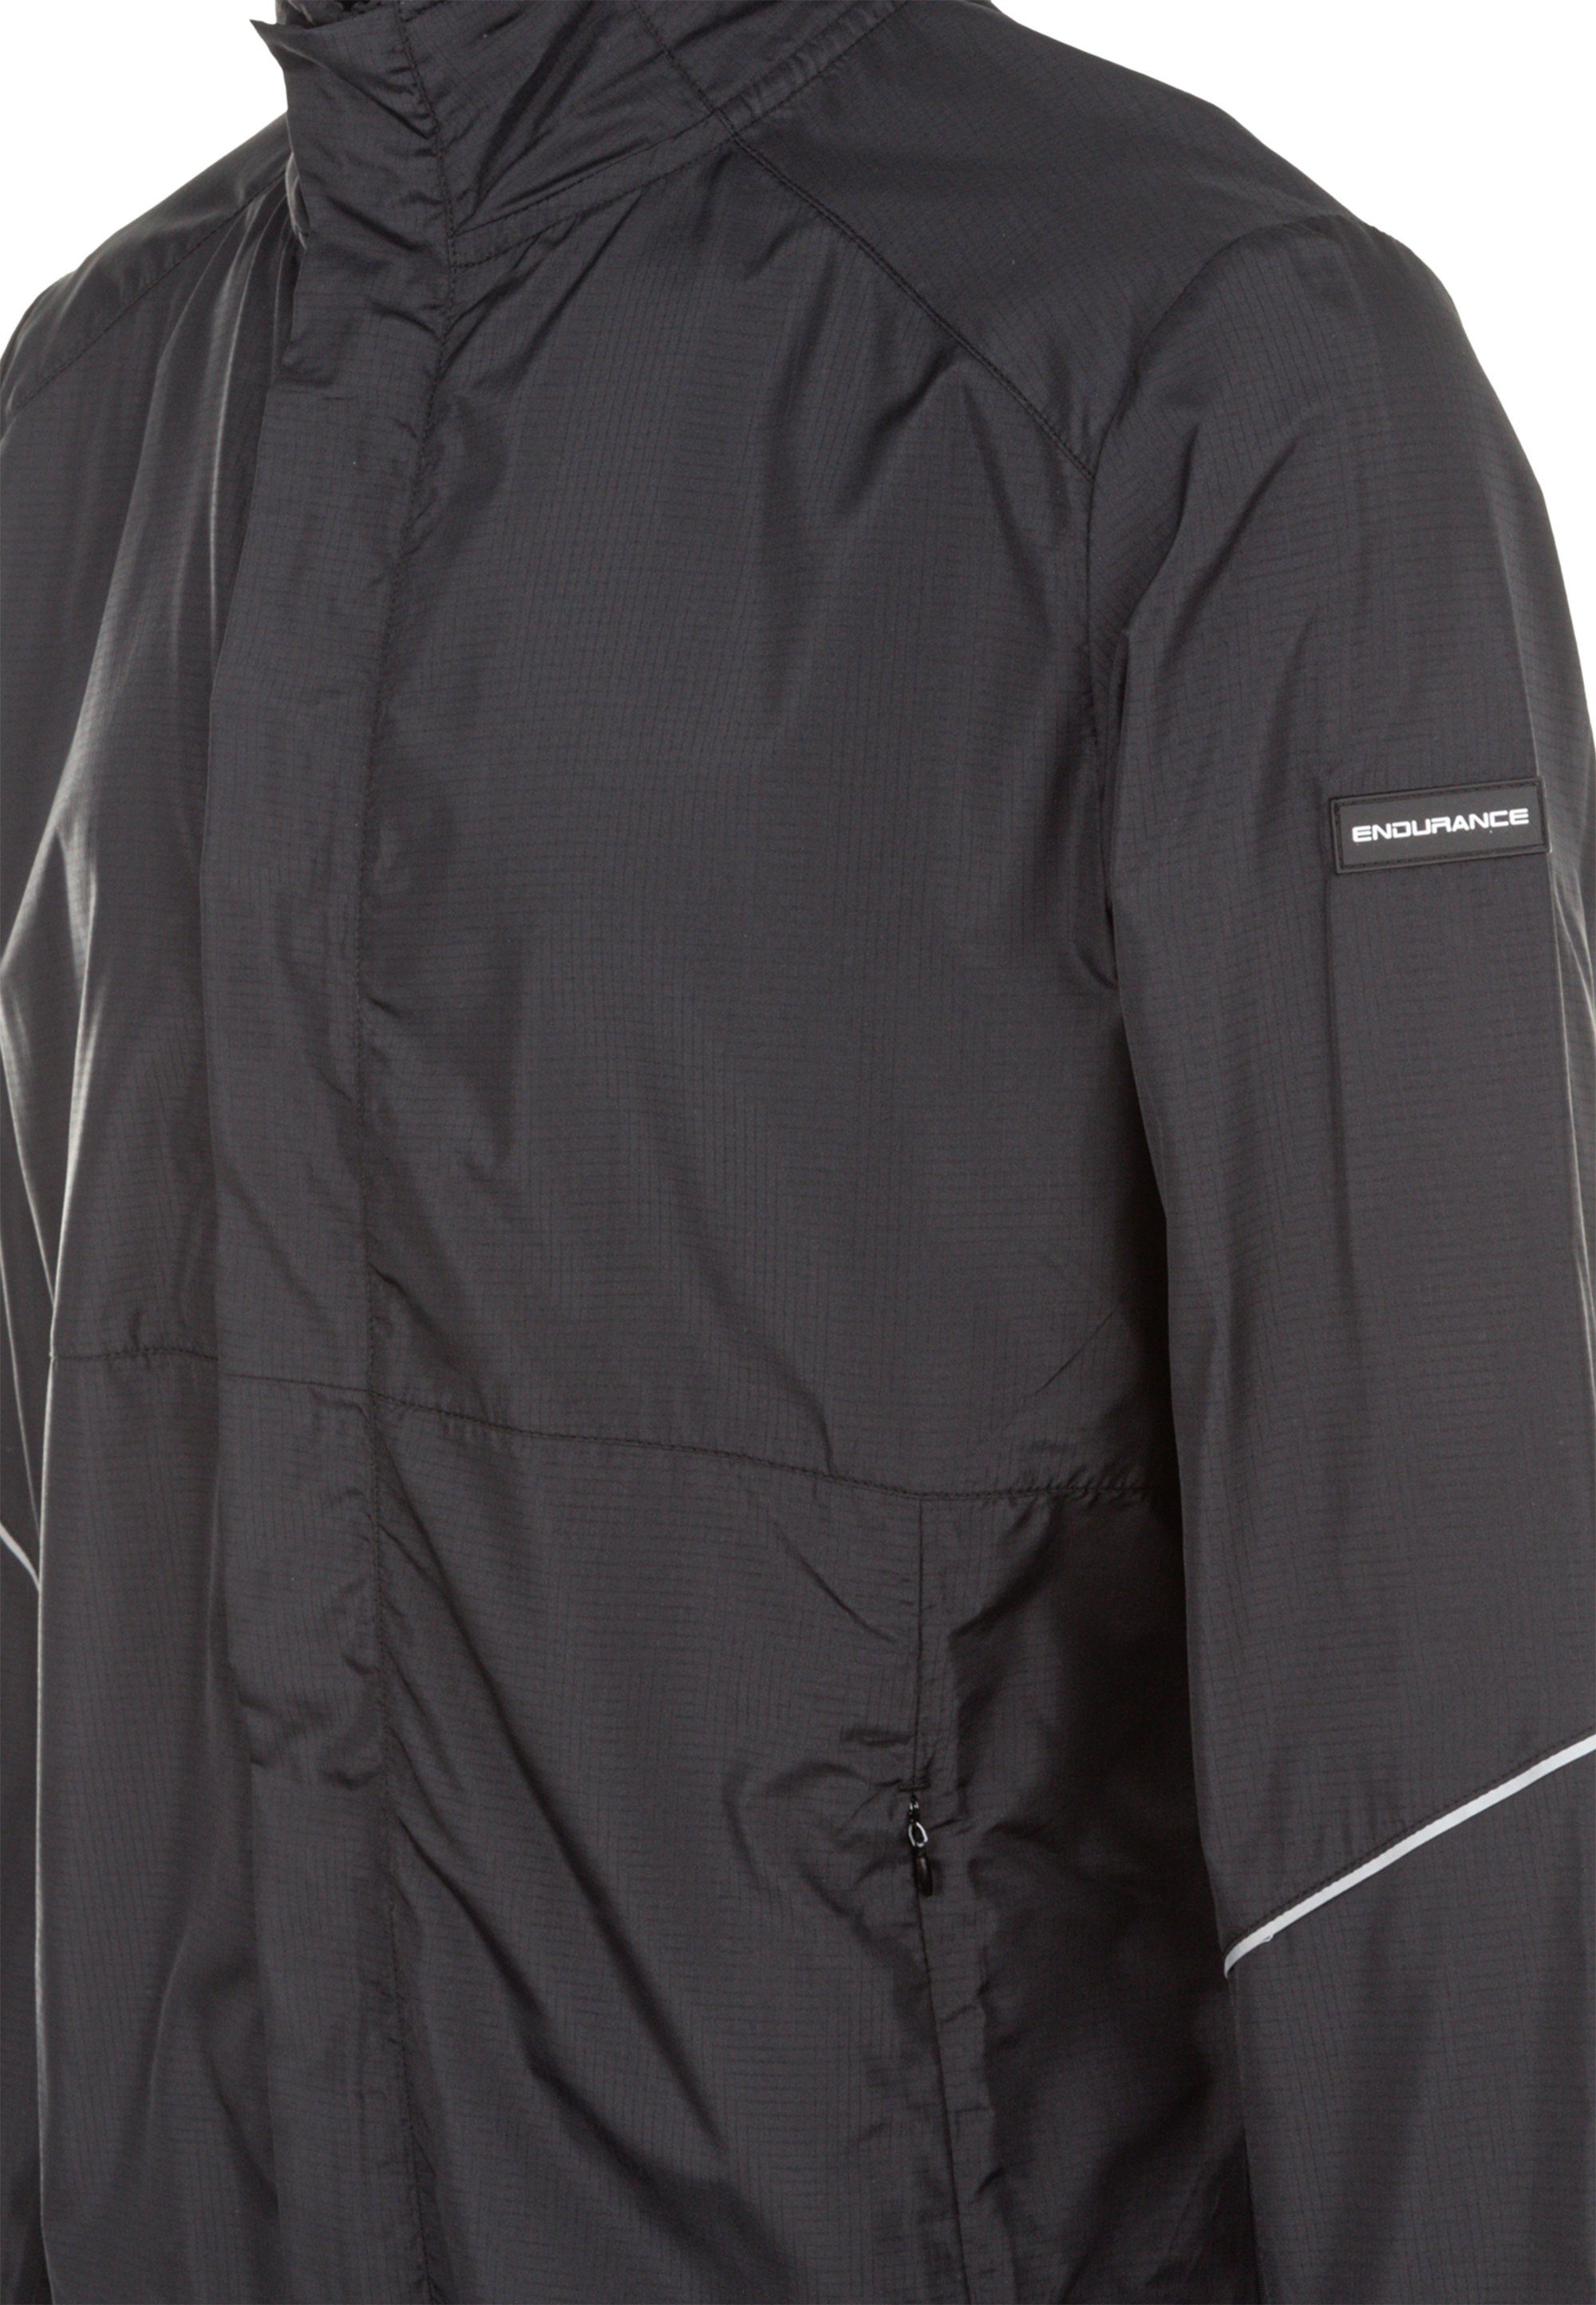 mit Jacket ENDURANCE reflektierenden Laufjacke Details M schwarz NOVANT Functional